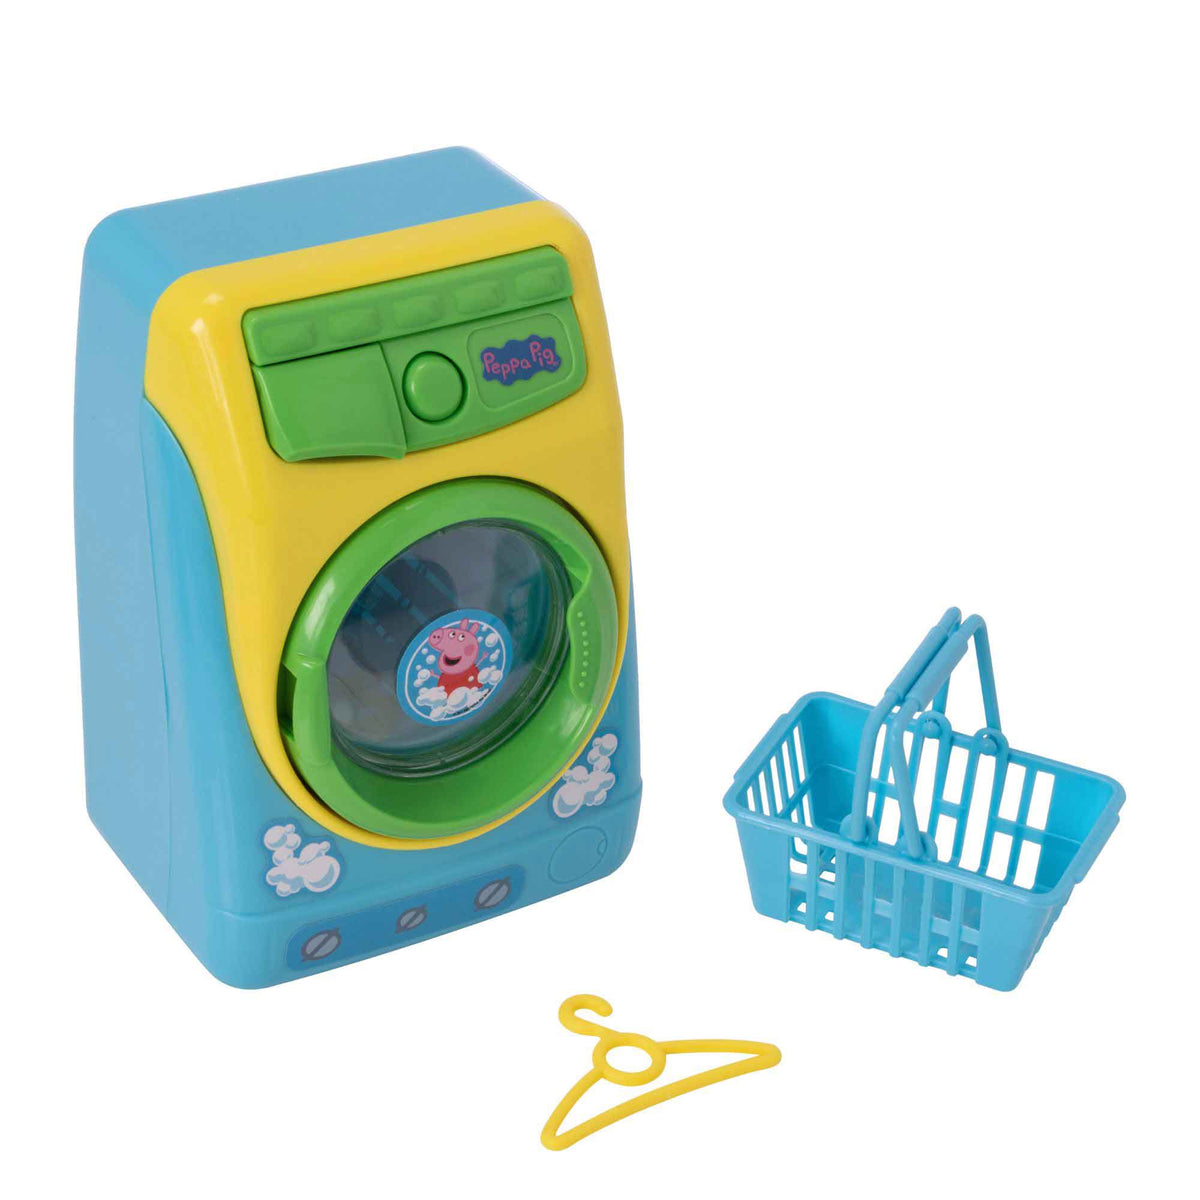 Peppa Pig Washing Machine Toy